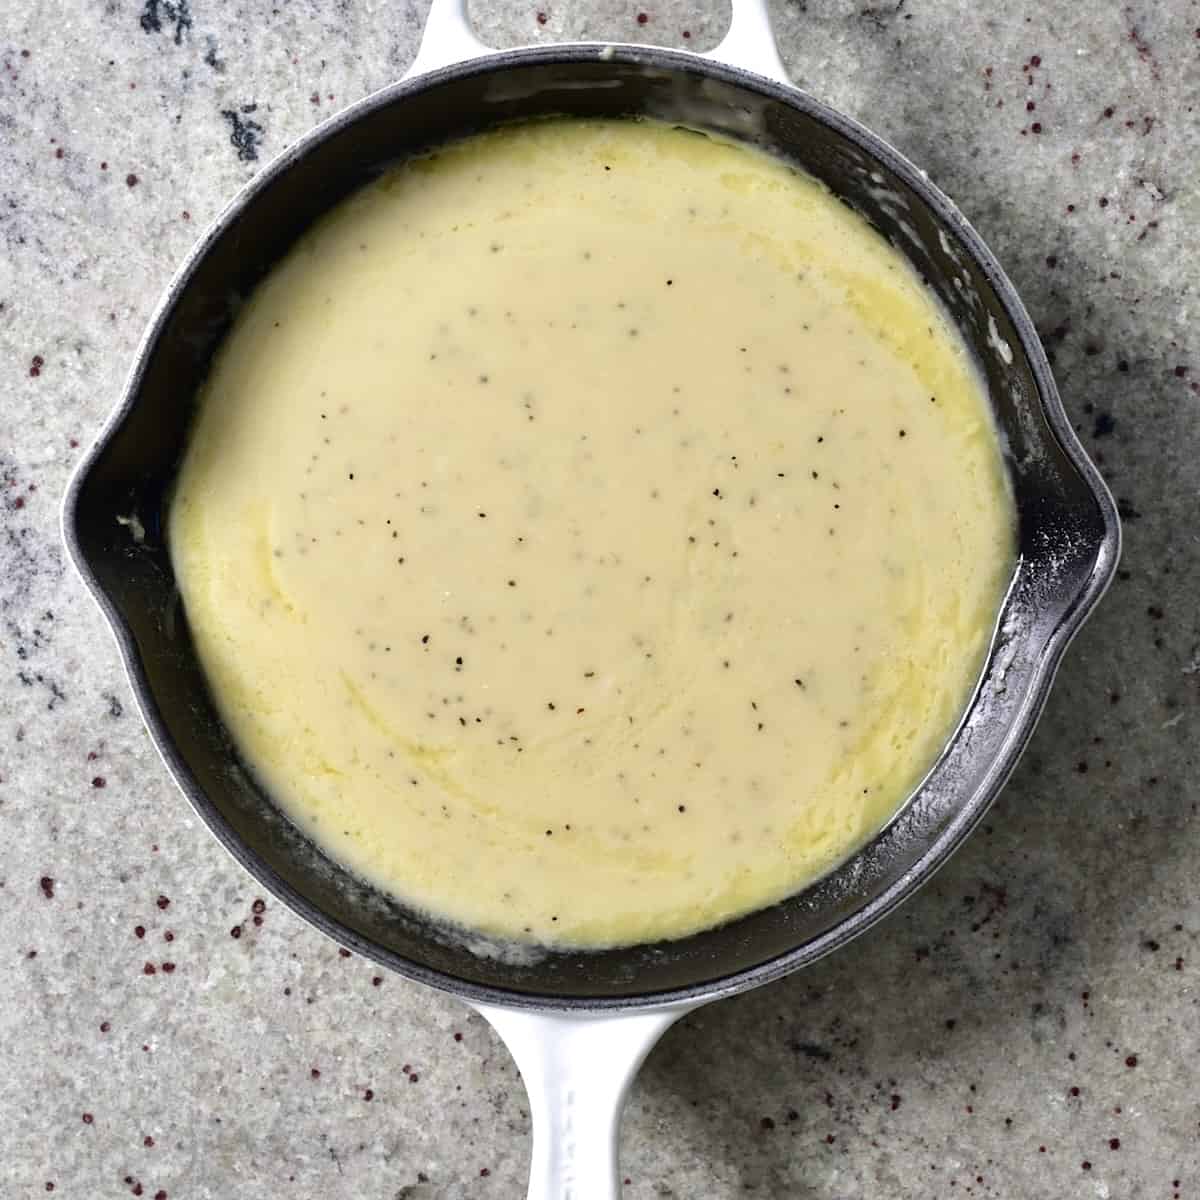 A saucepan with garlic cream sauce